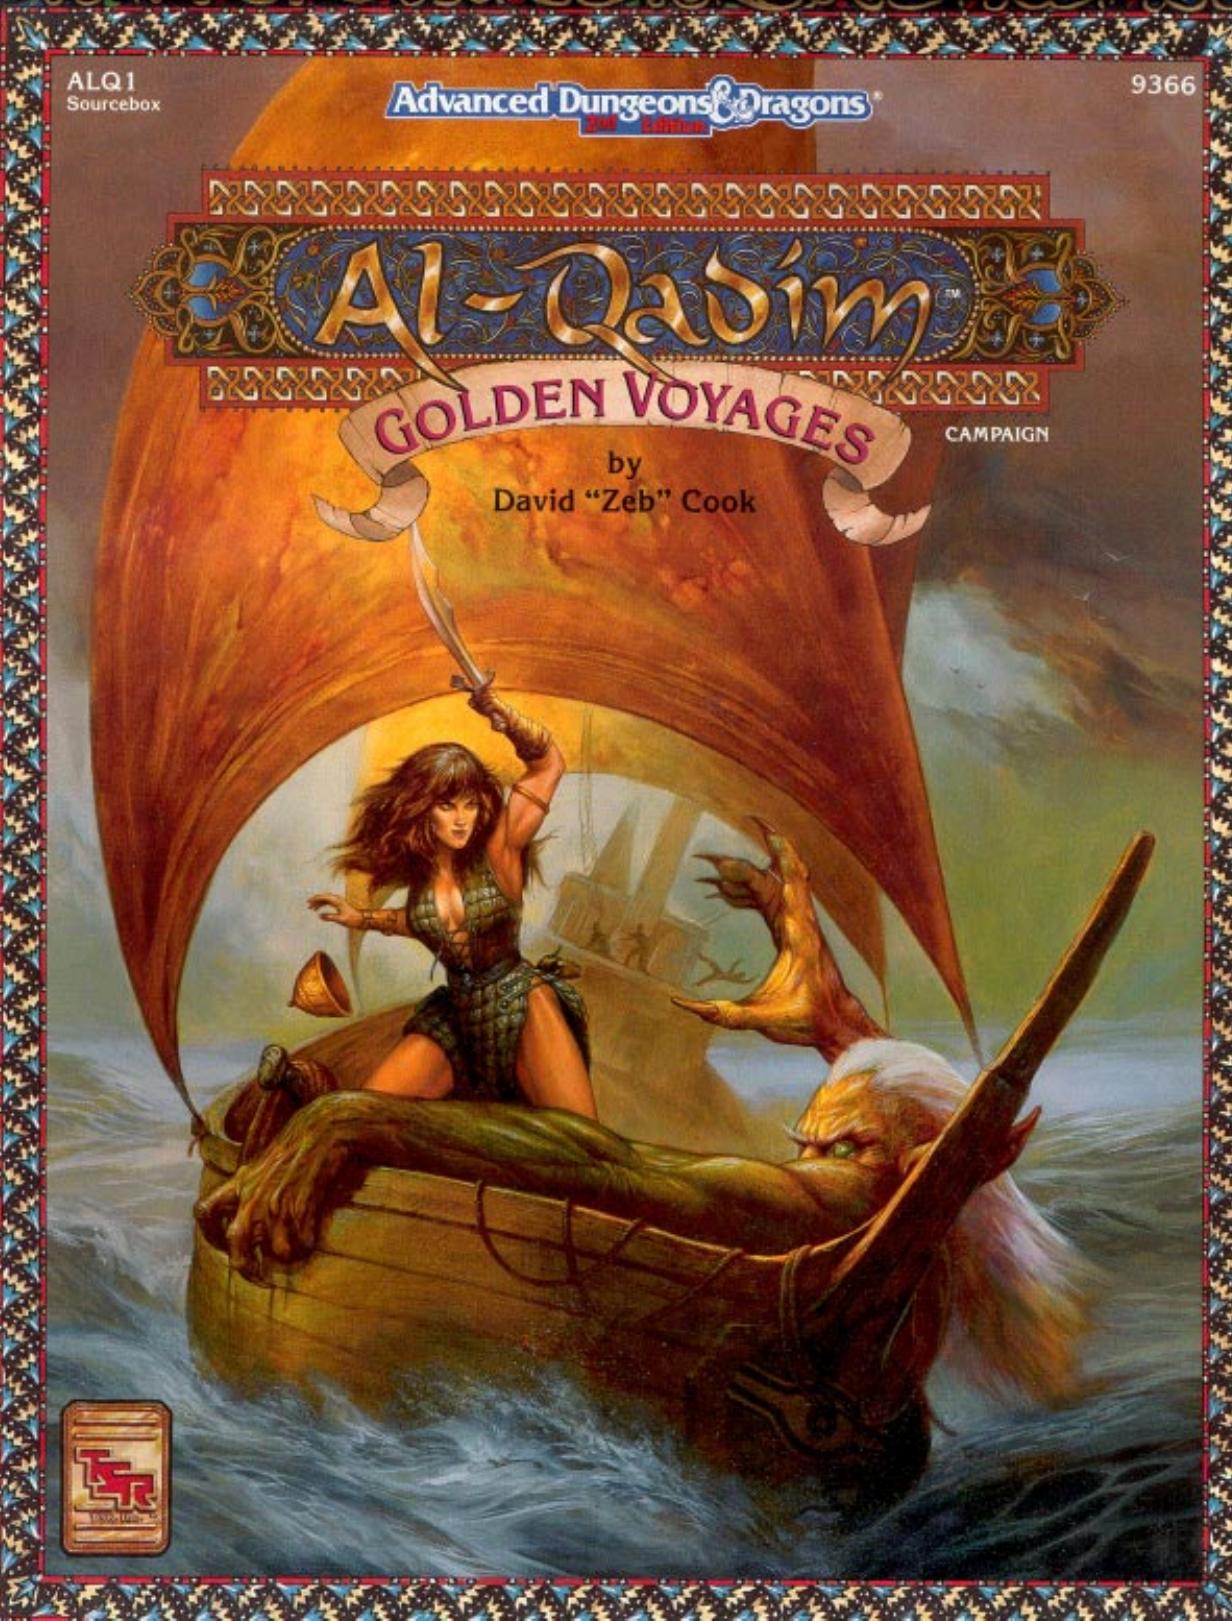 Golden Voyages